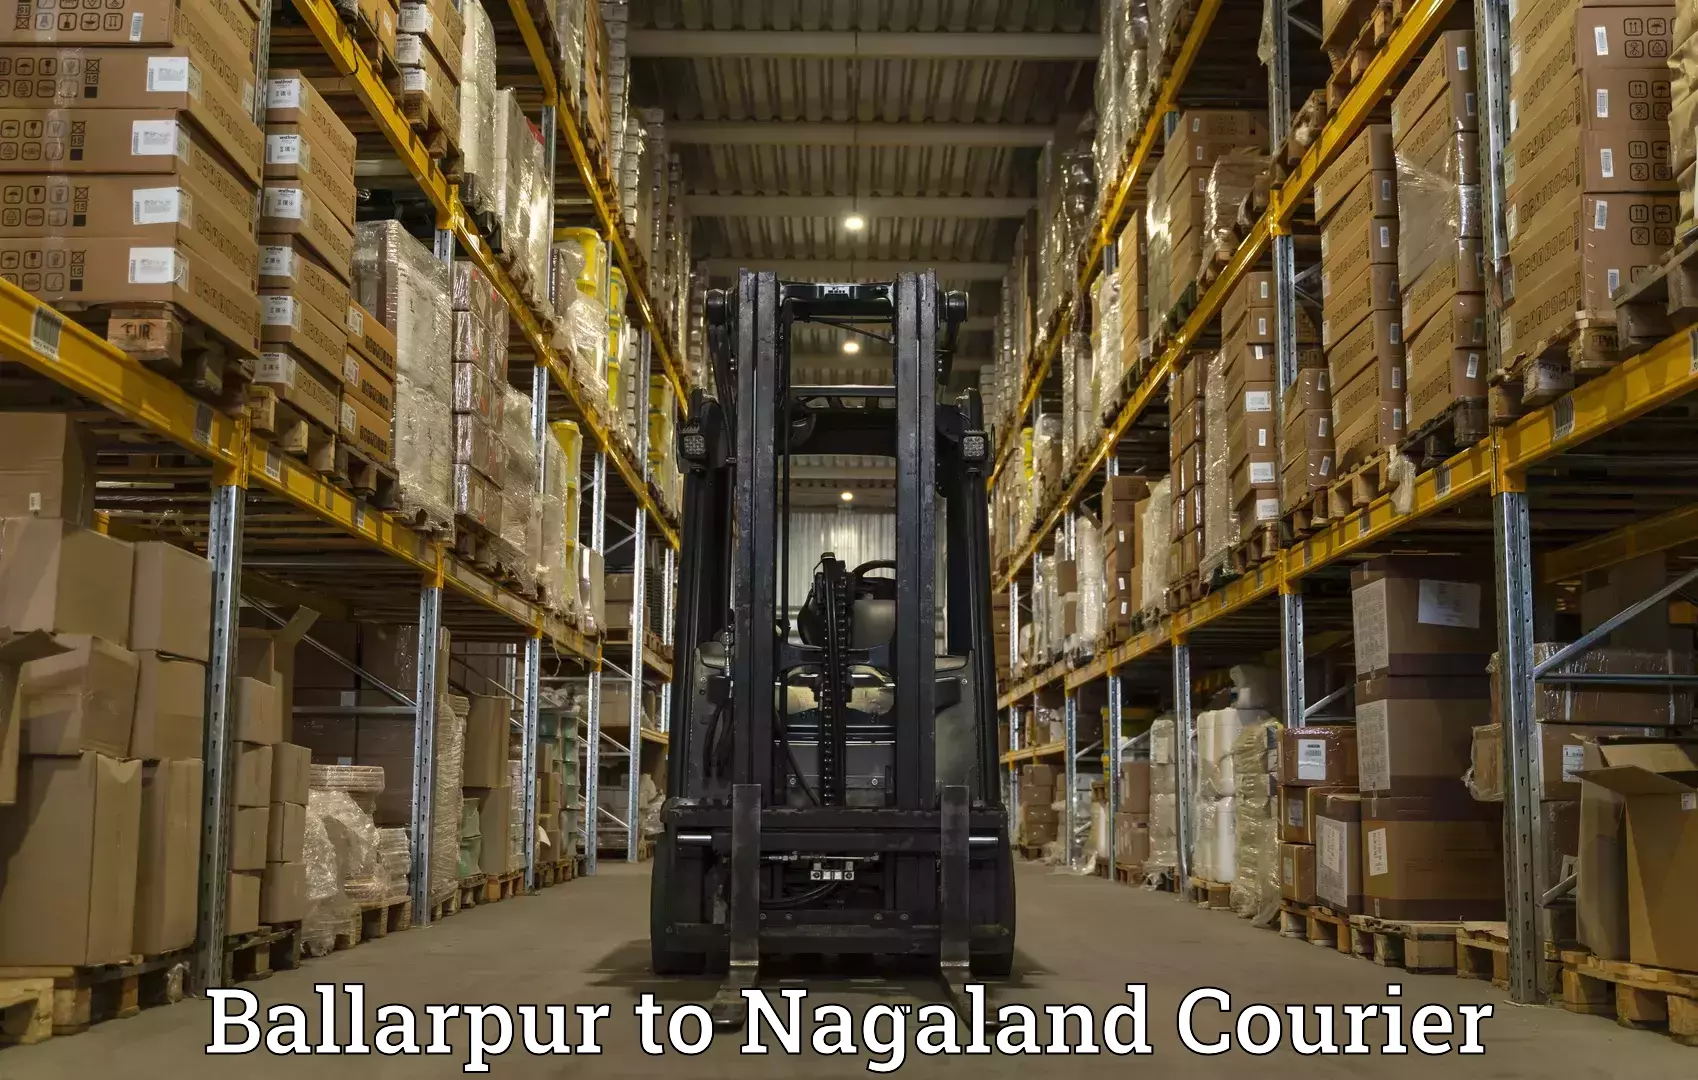 Courier service comparison Ballarpur to Nagaland